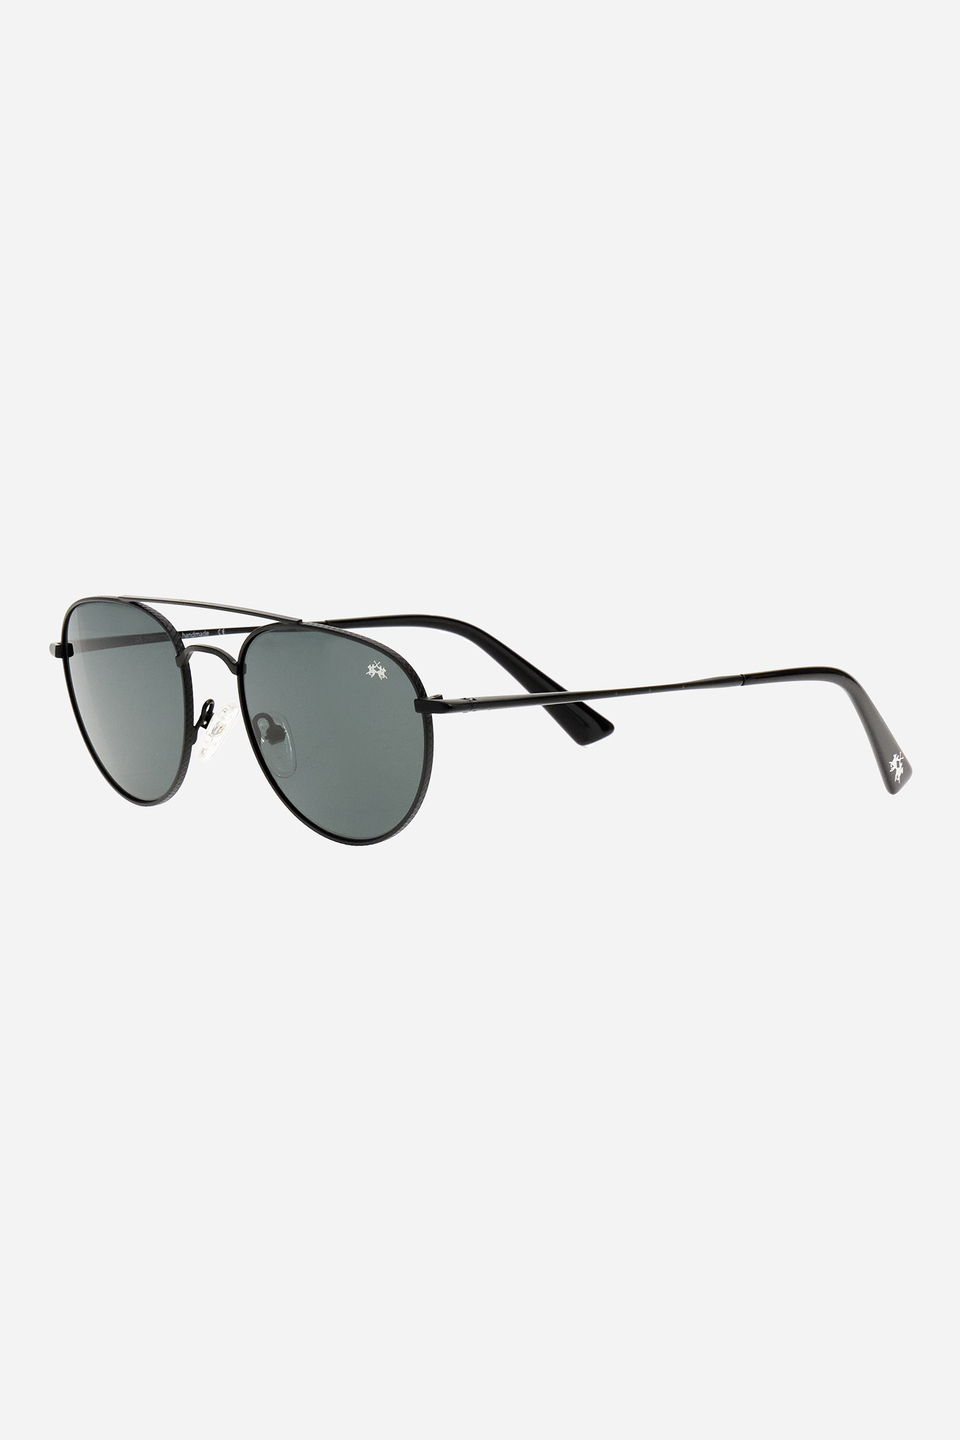 Sonnenbrille mit tropfenförmigem Metallrahmen | La Martina - Official Online Shop